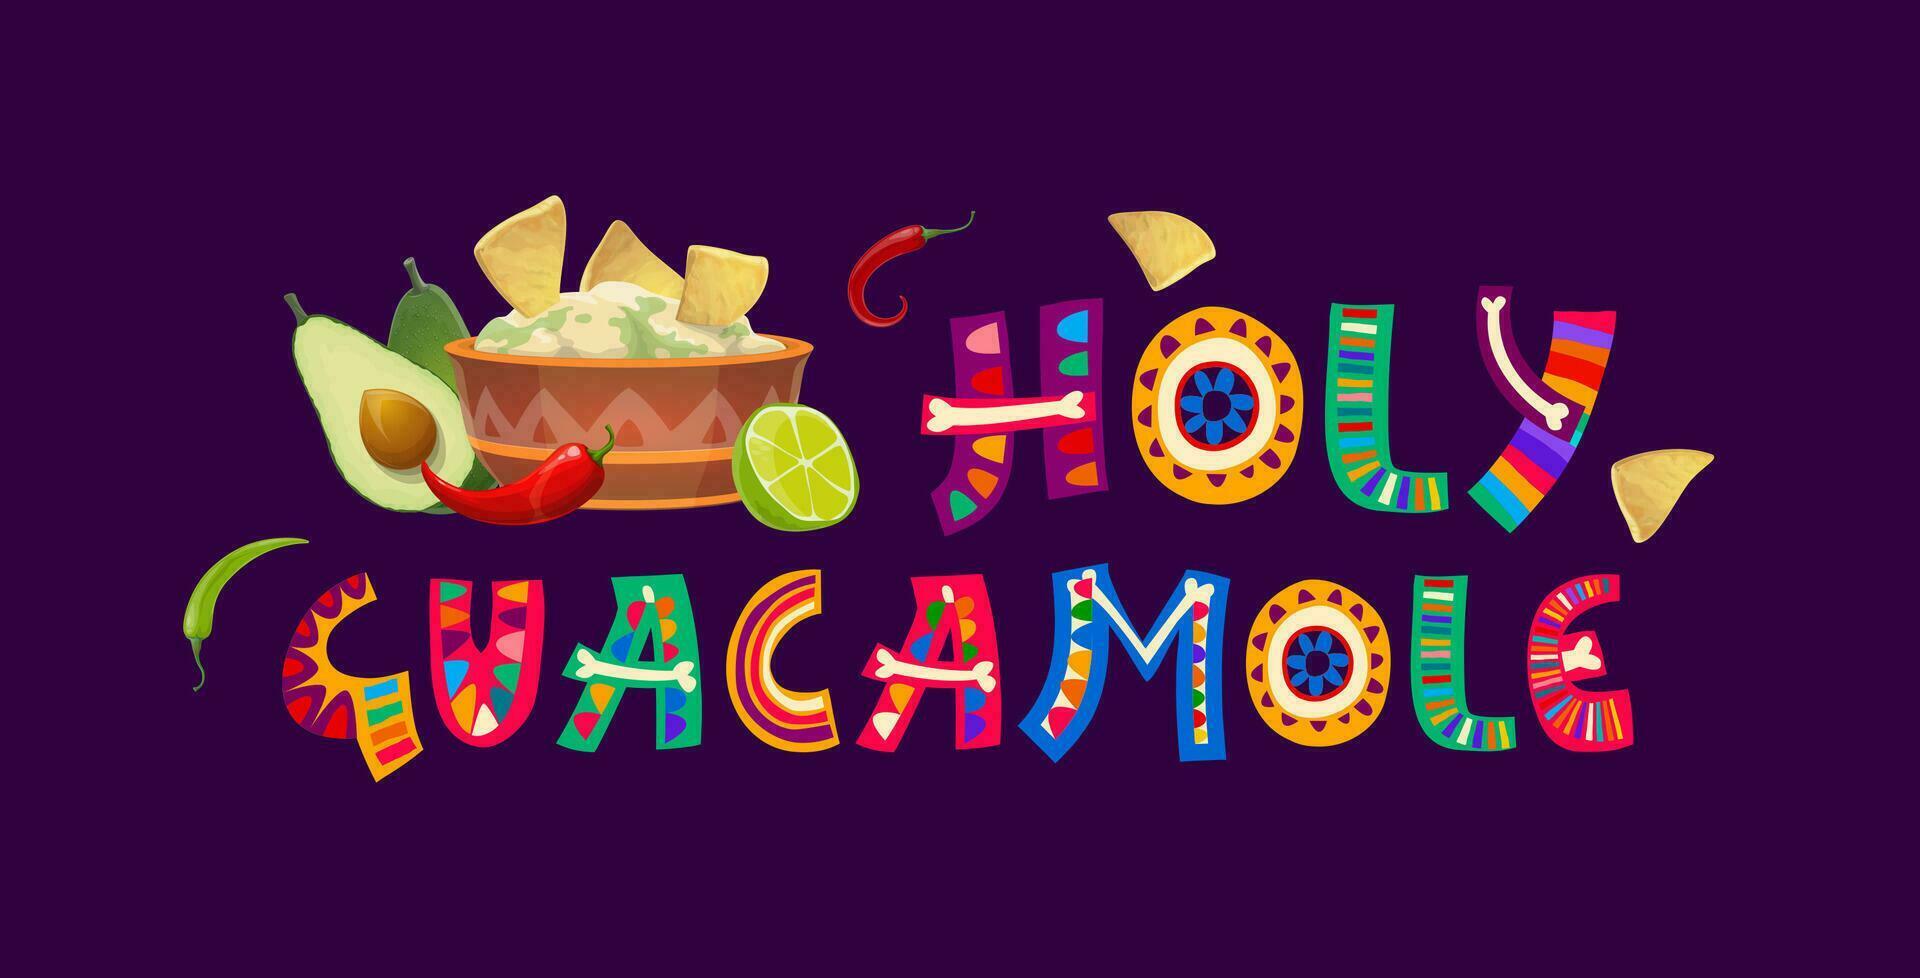 piedosos guacamole, mexicano citar, abacate e nachos vetor